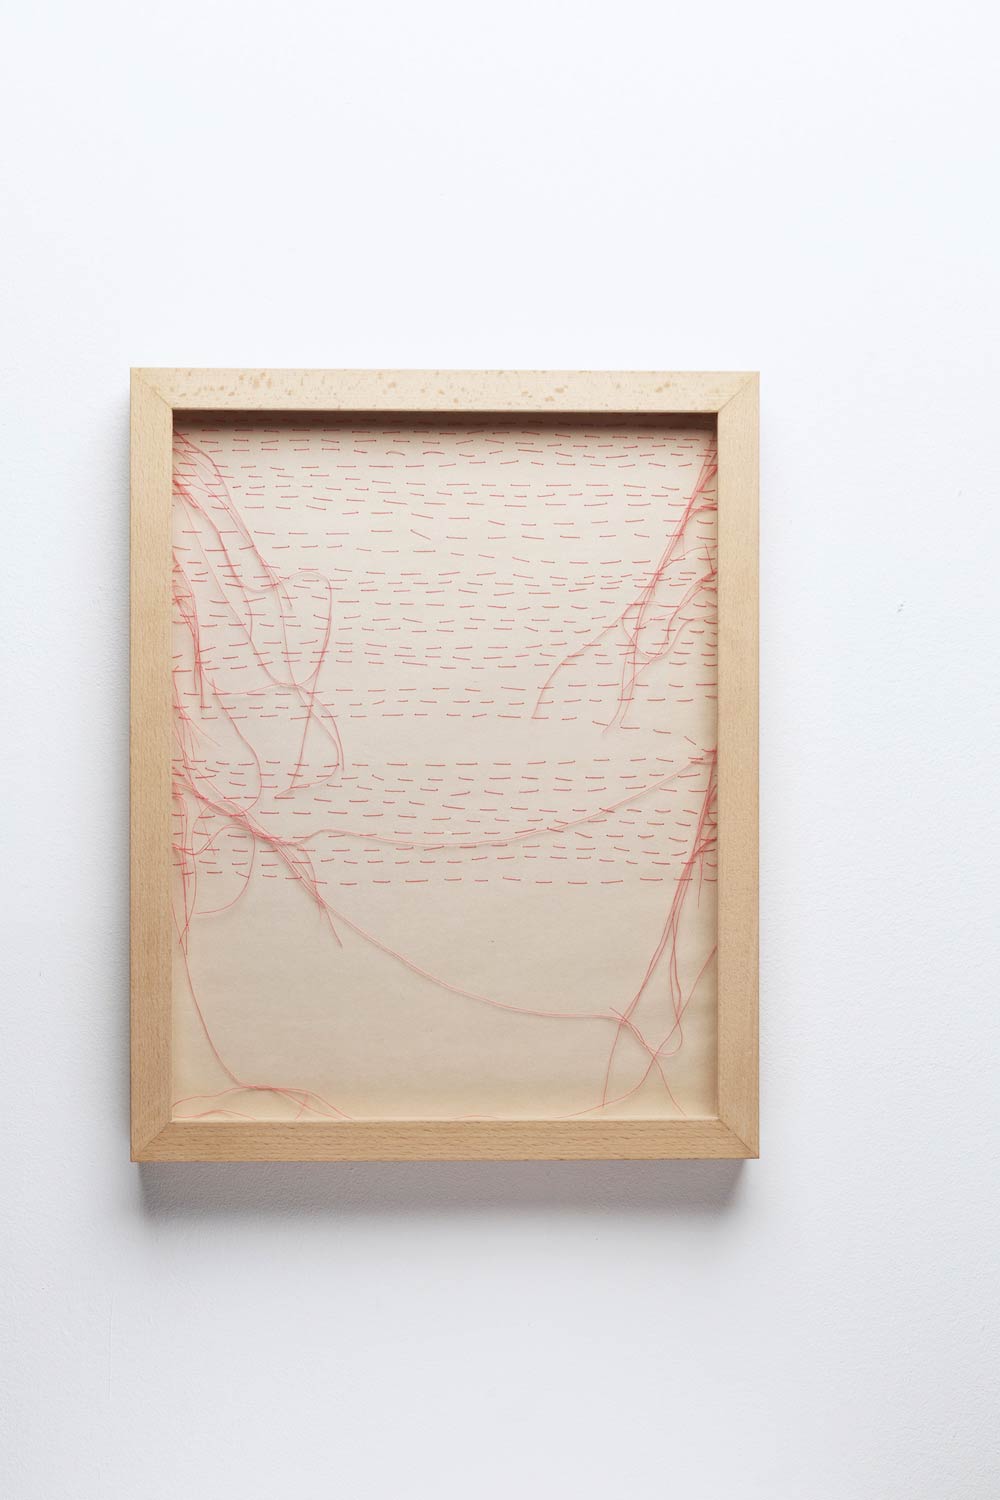 Sara Al Haddad, dopamine, 2018, hand stitches on paper, set of 4: 38.5x30.6cm (each)